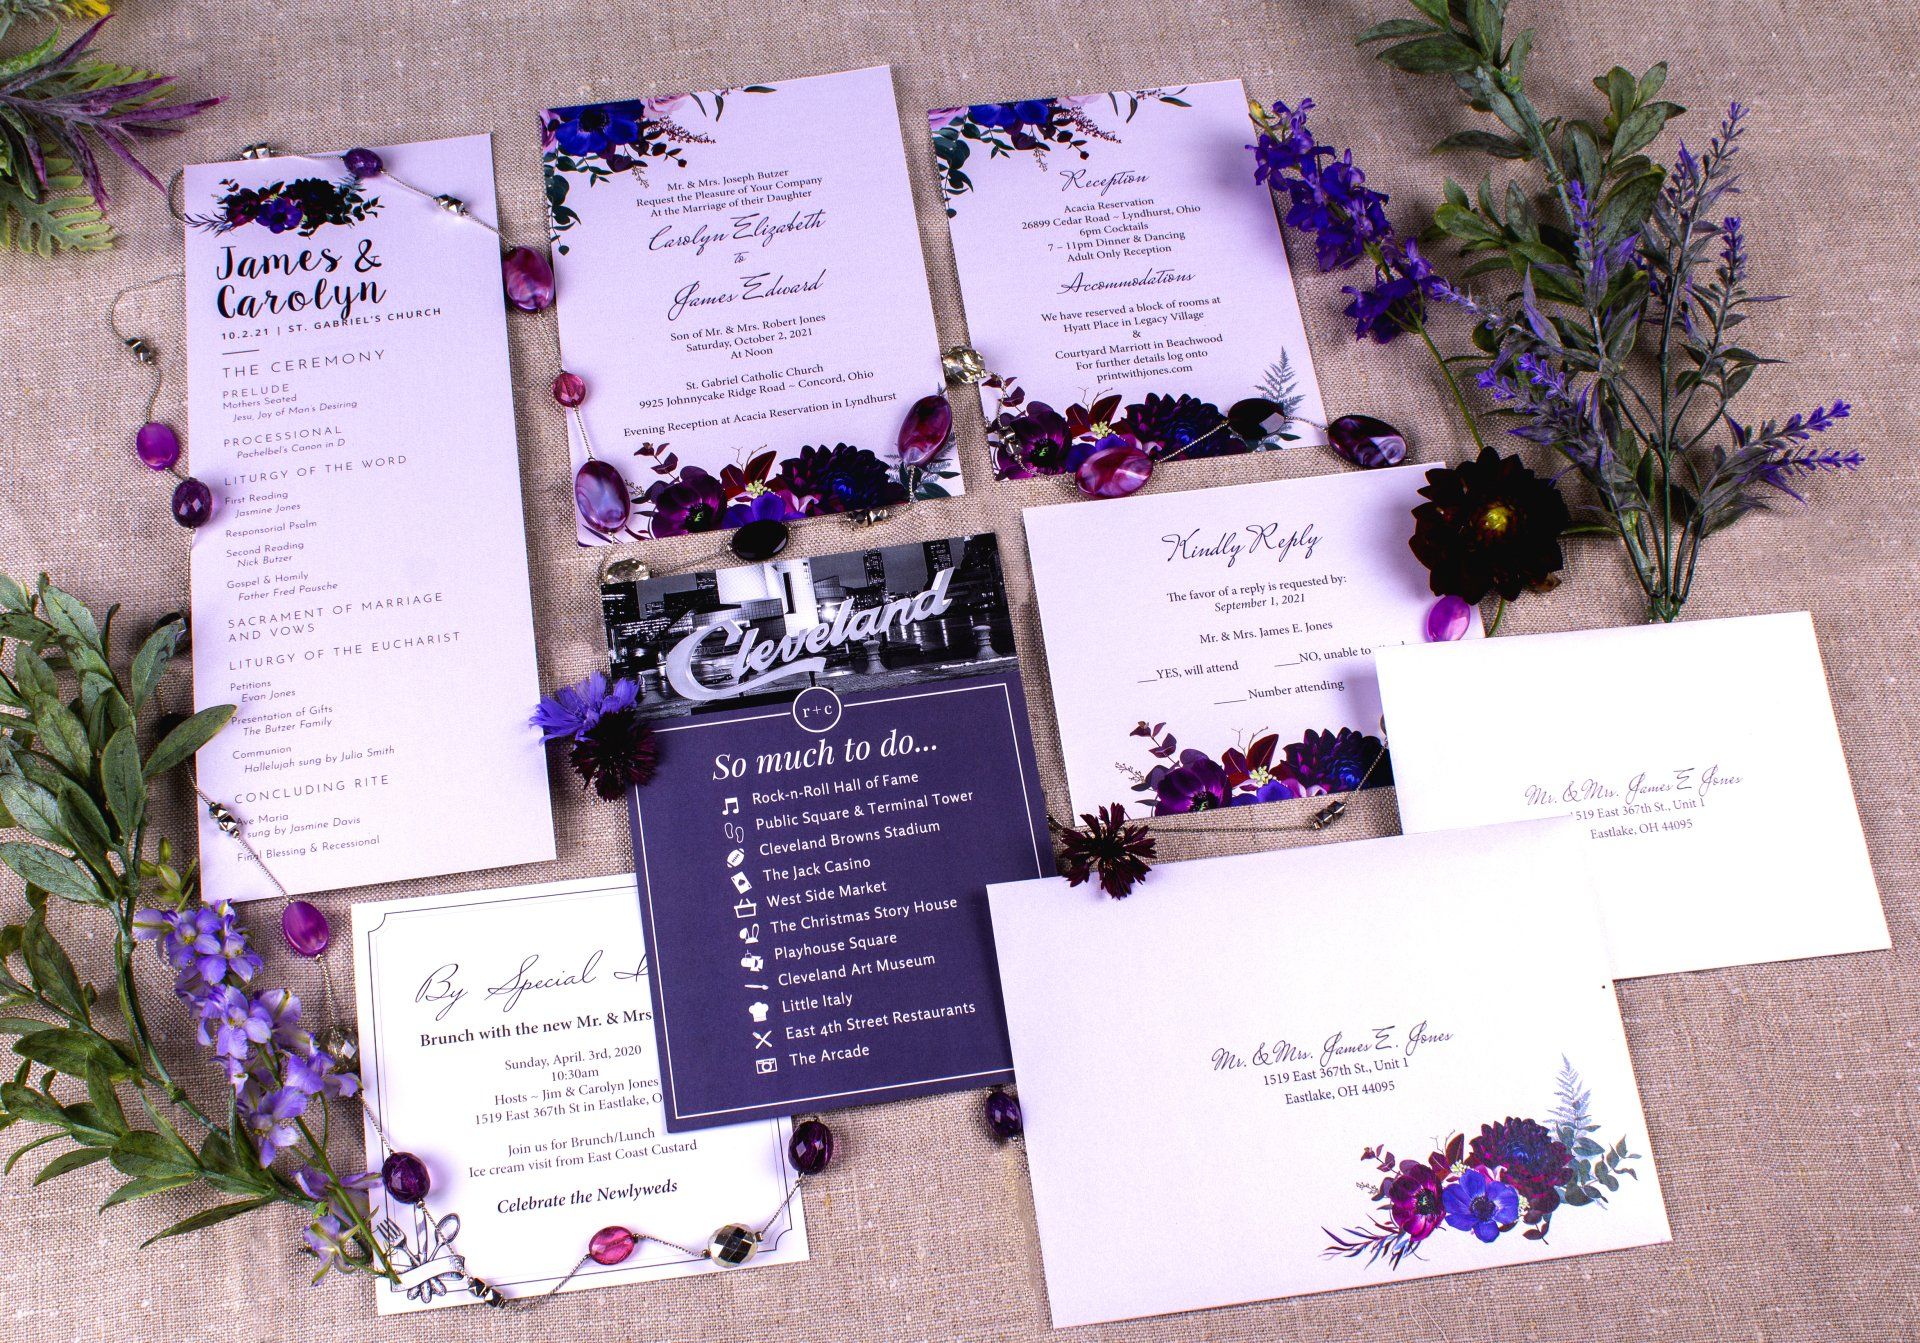 Wedding Printing Services